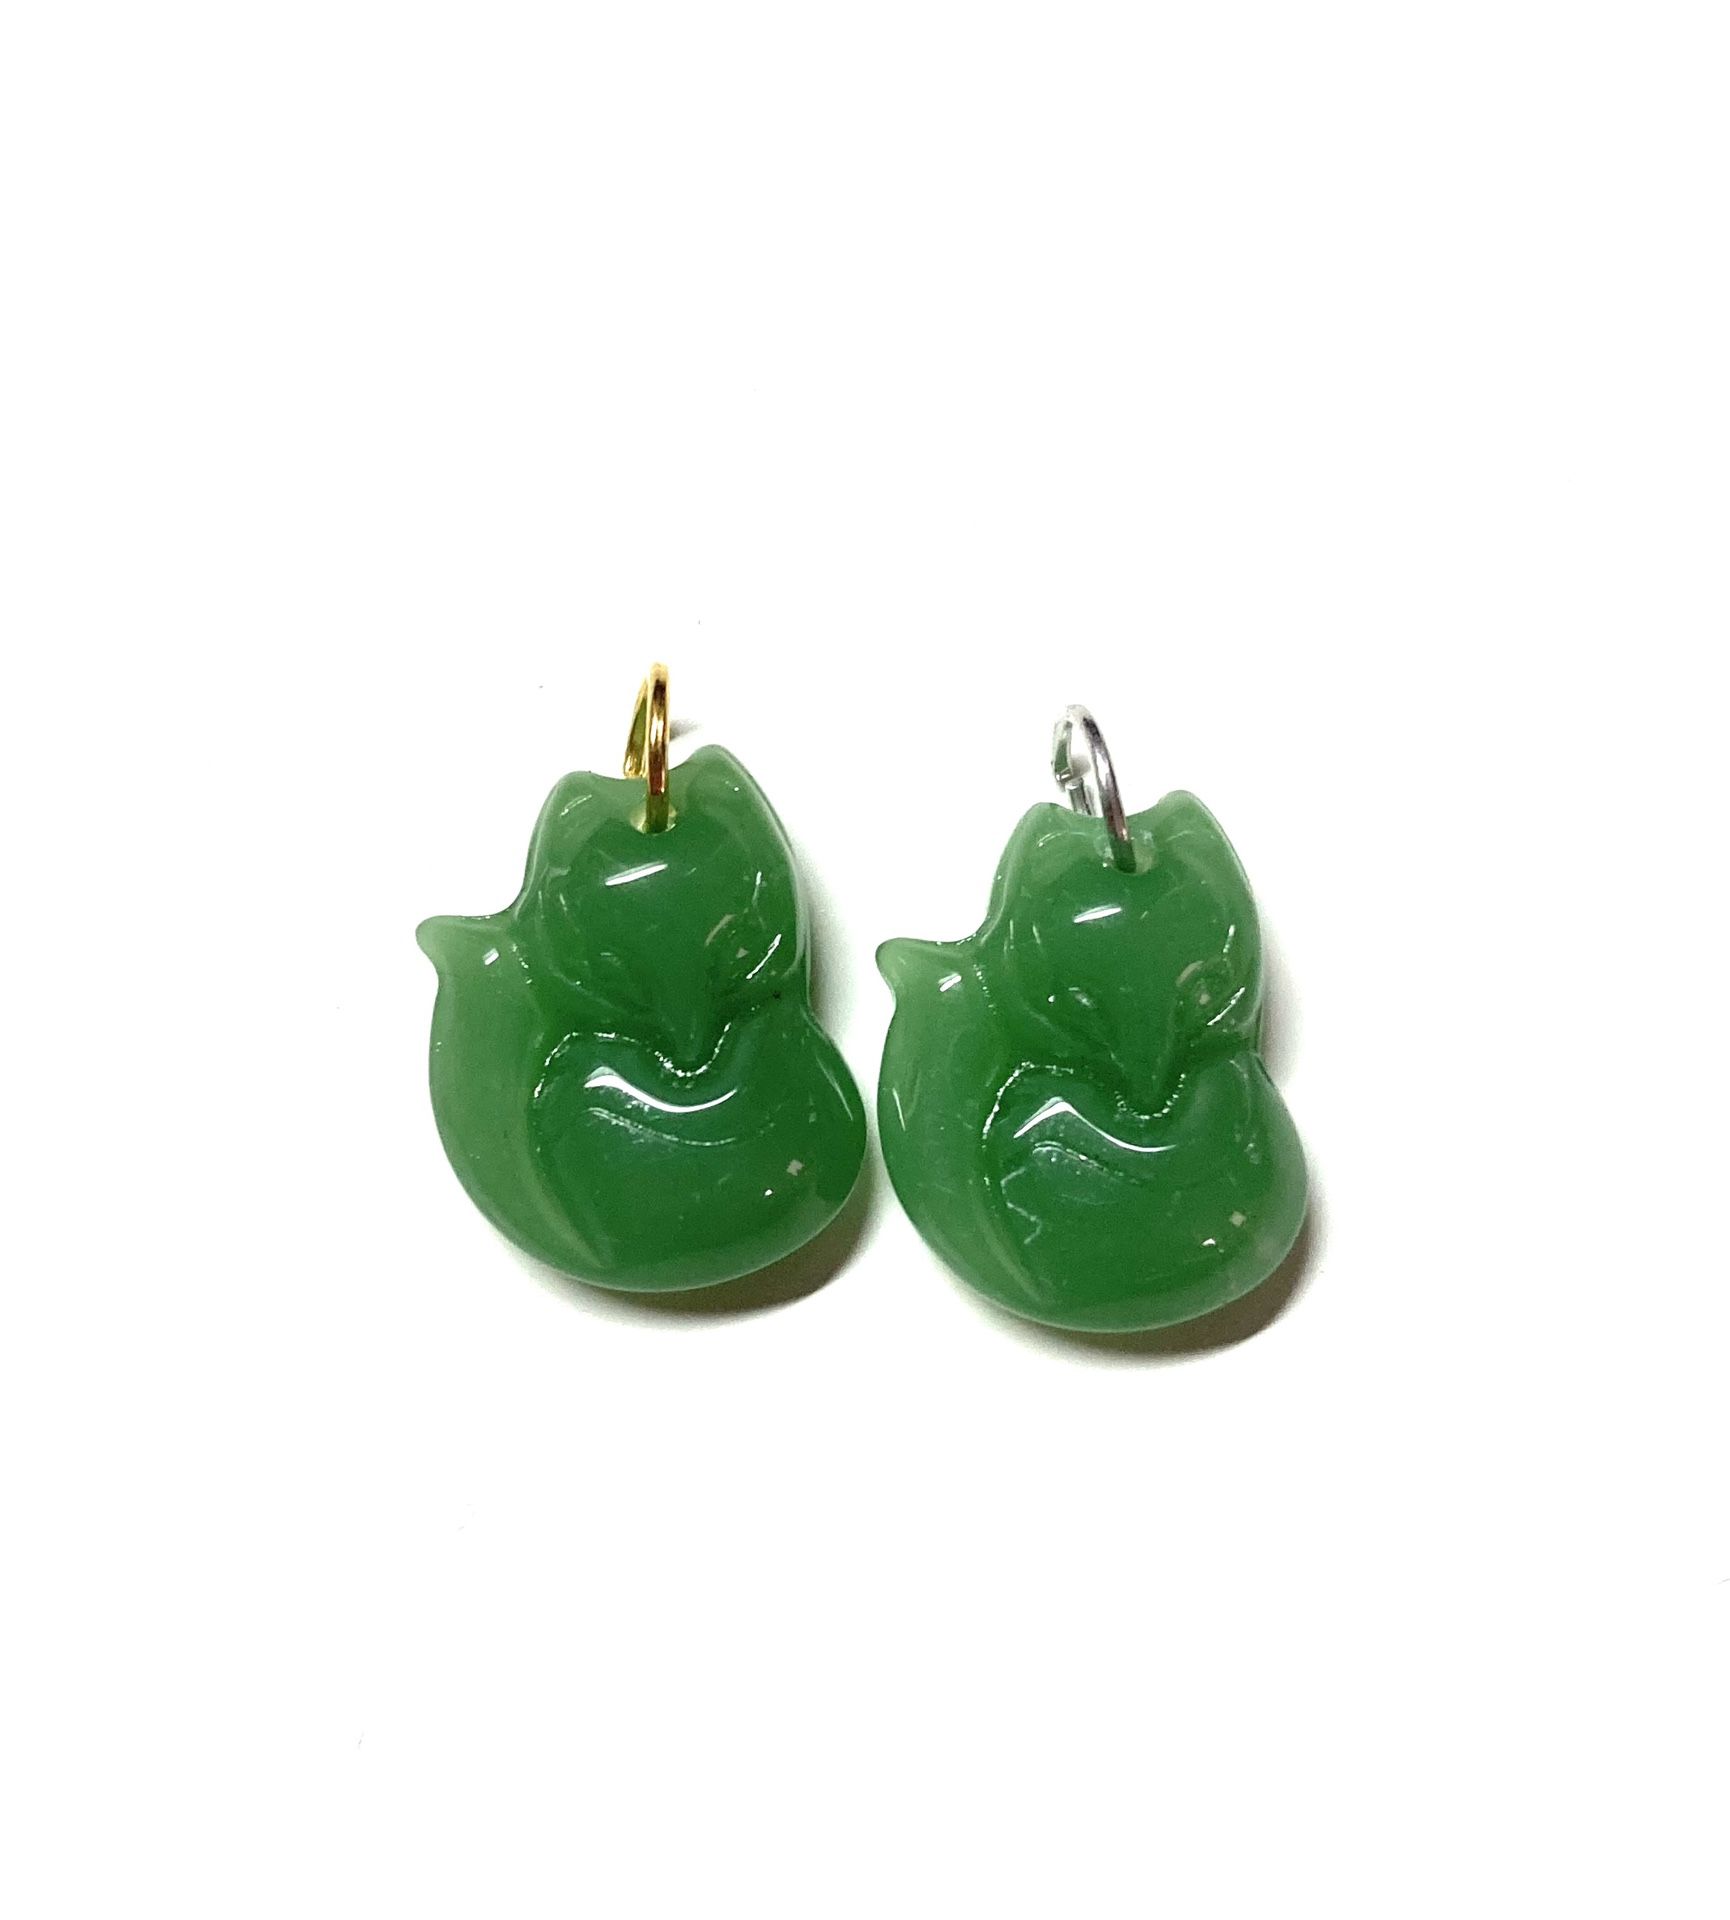 light Green jade jadeite fox pendant necklace 